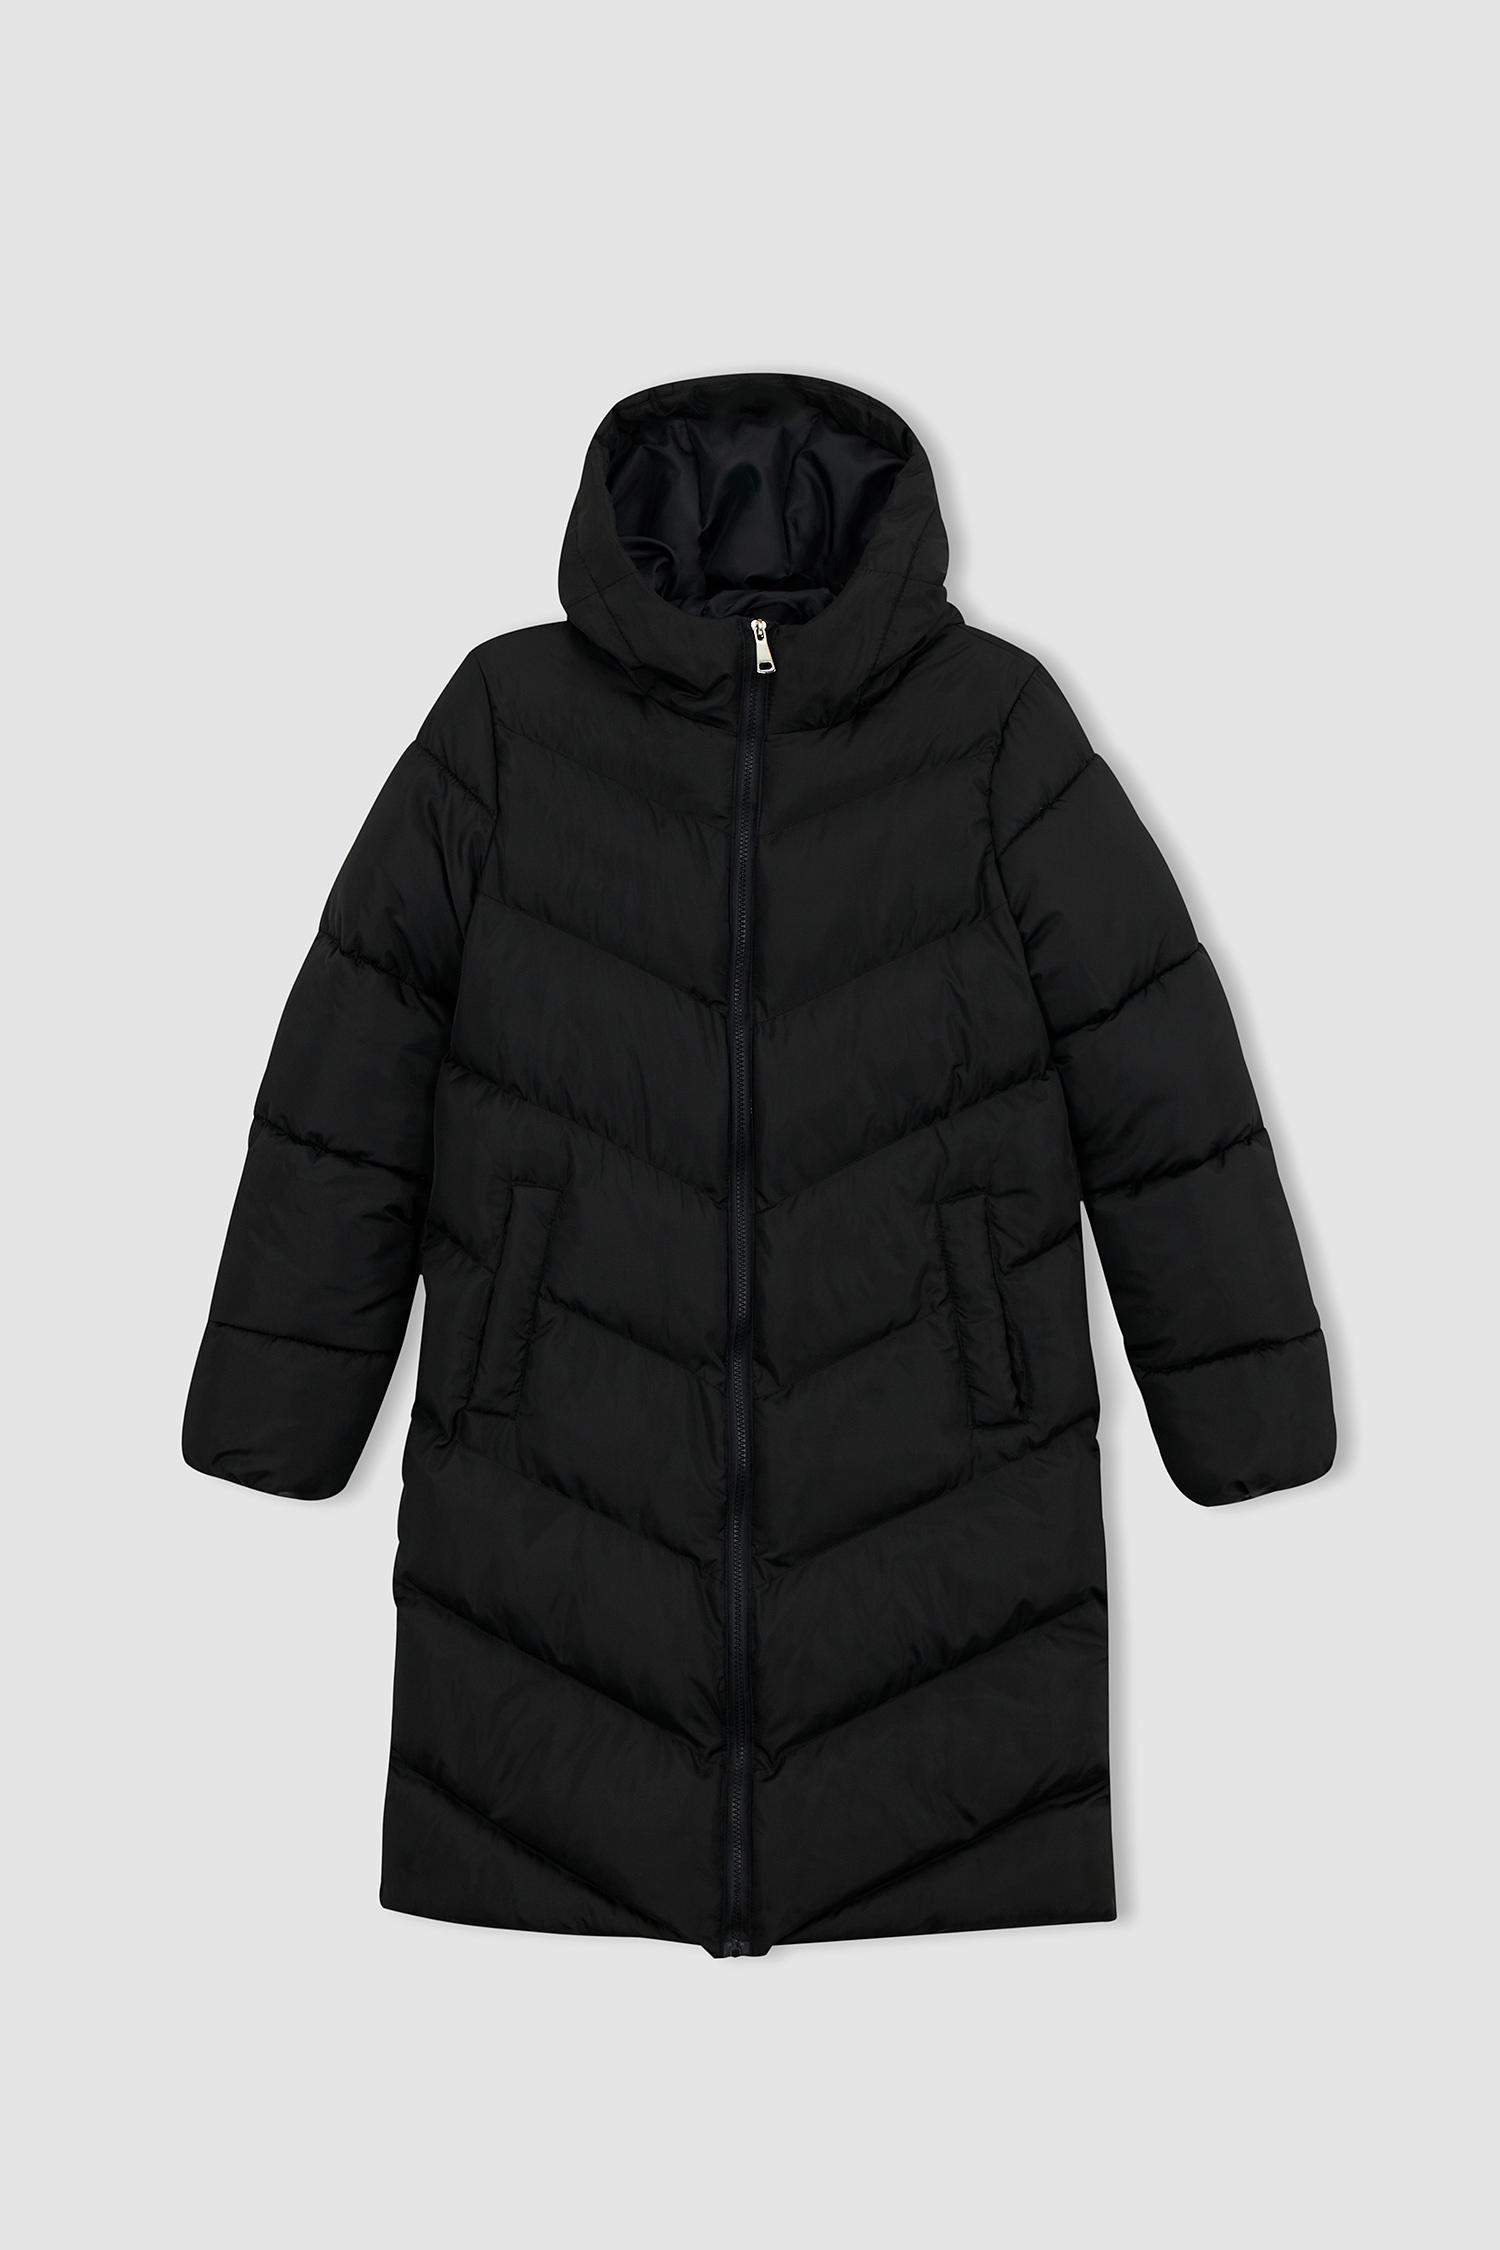 Black WOMEN Waterproof Standard Fit Hooded Thick Parka Coat 2772032 ...